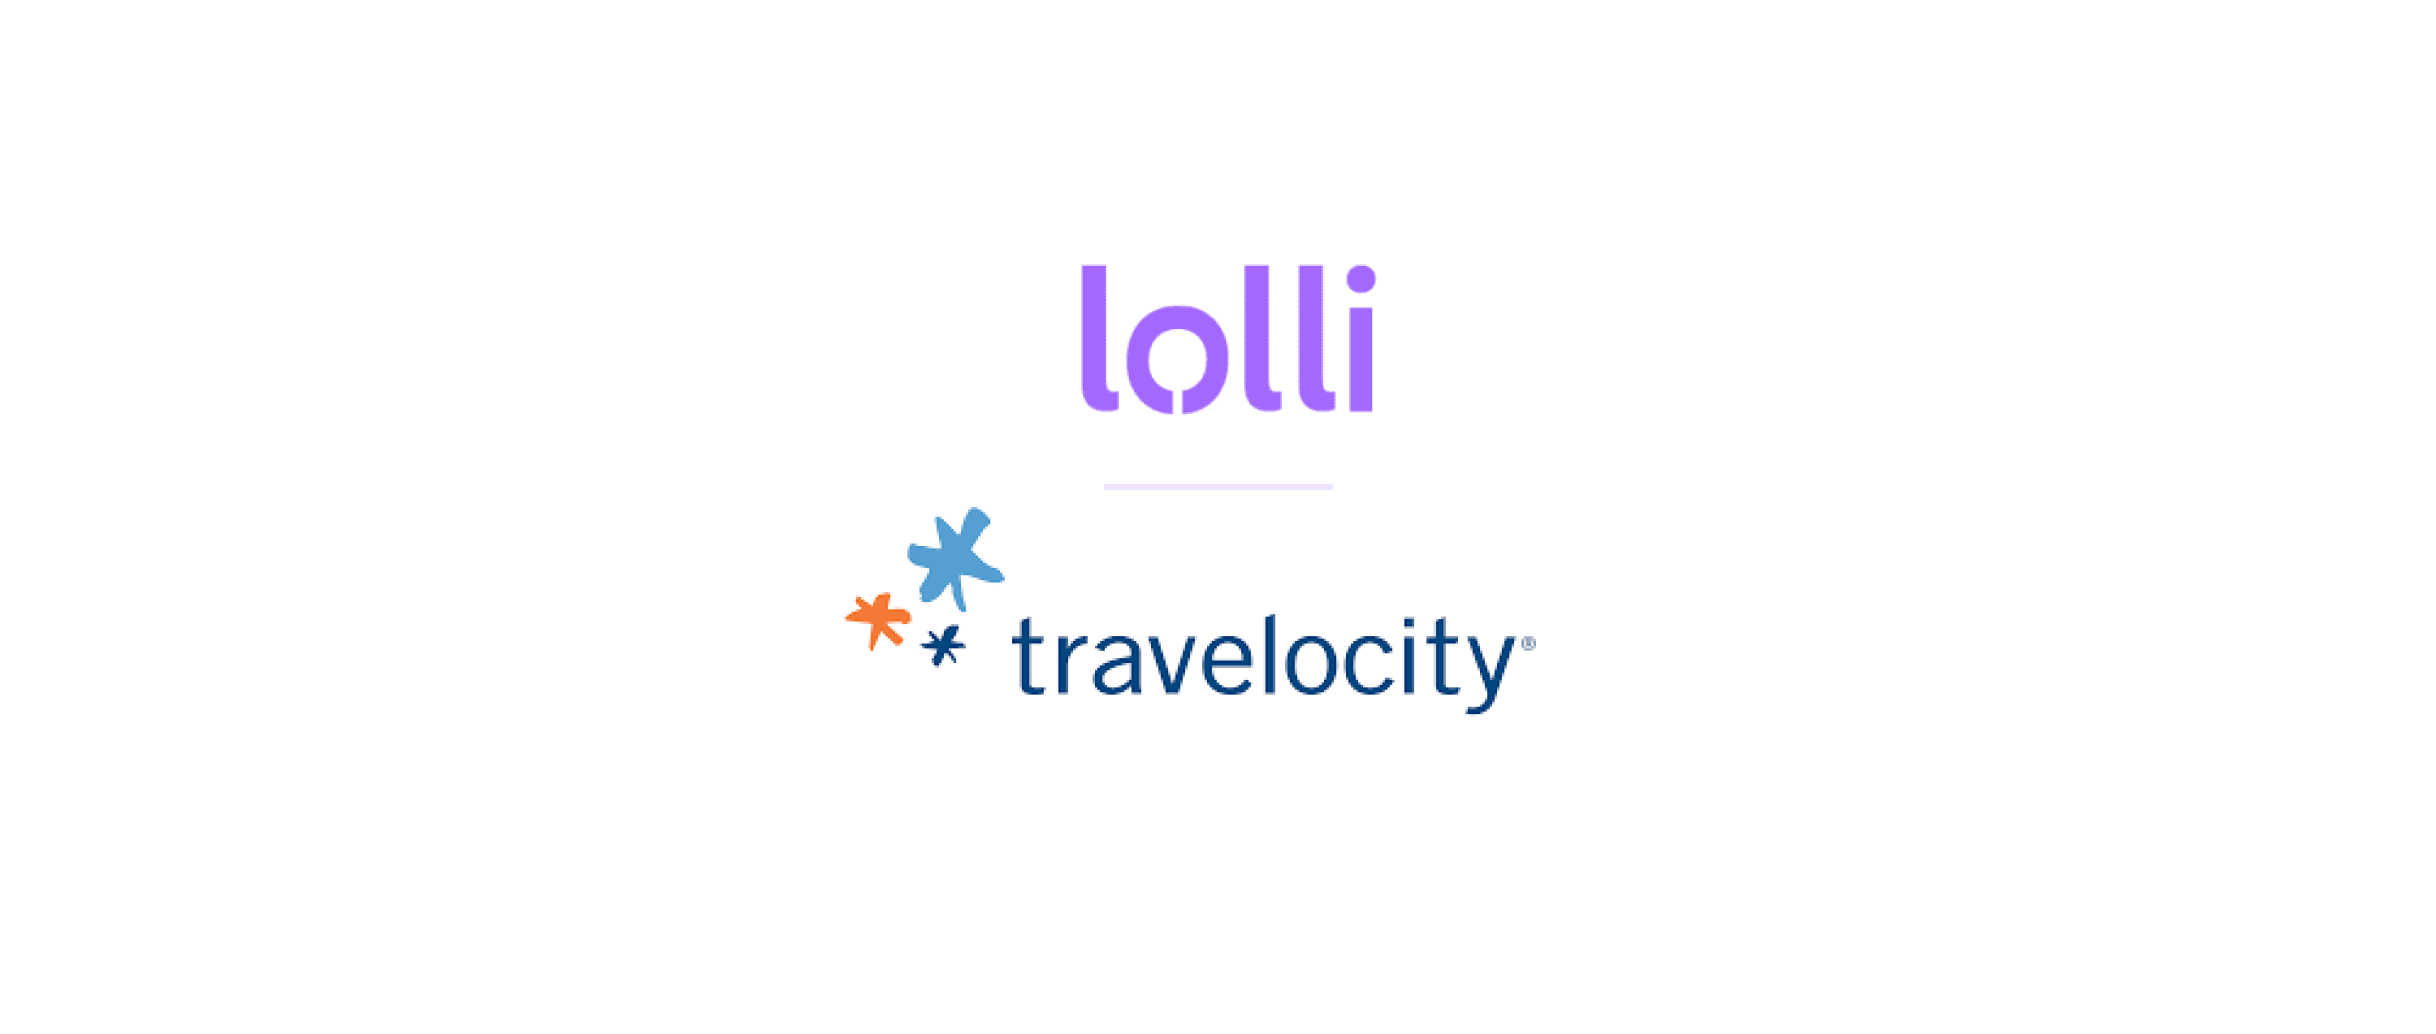 Travelocity is Now on Lolli!